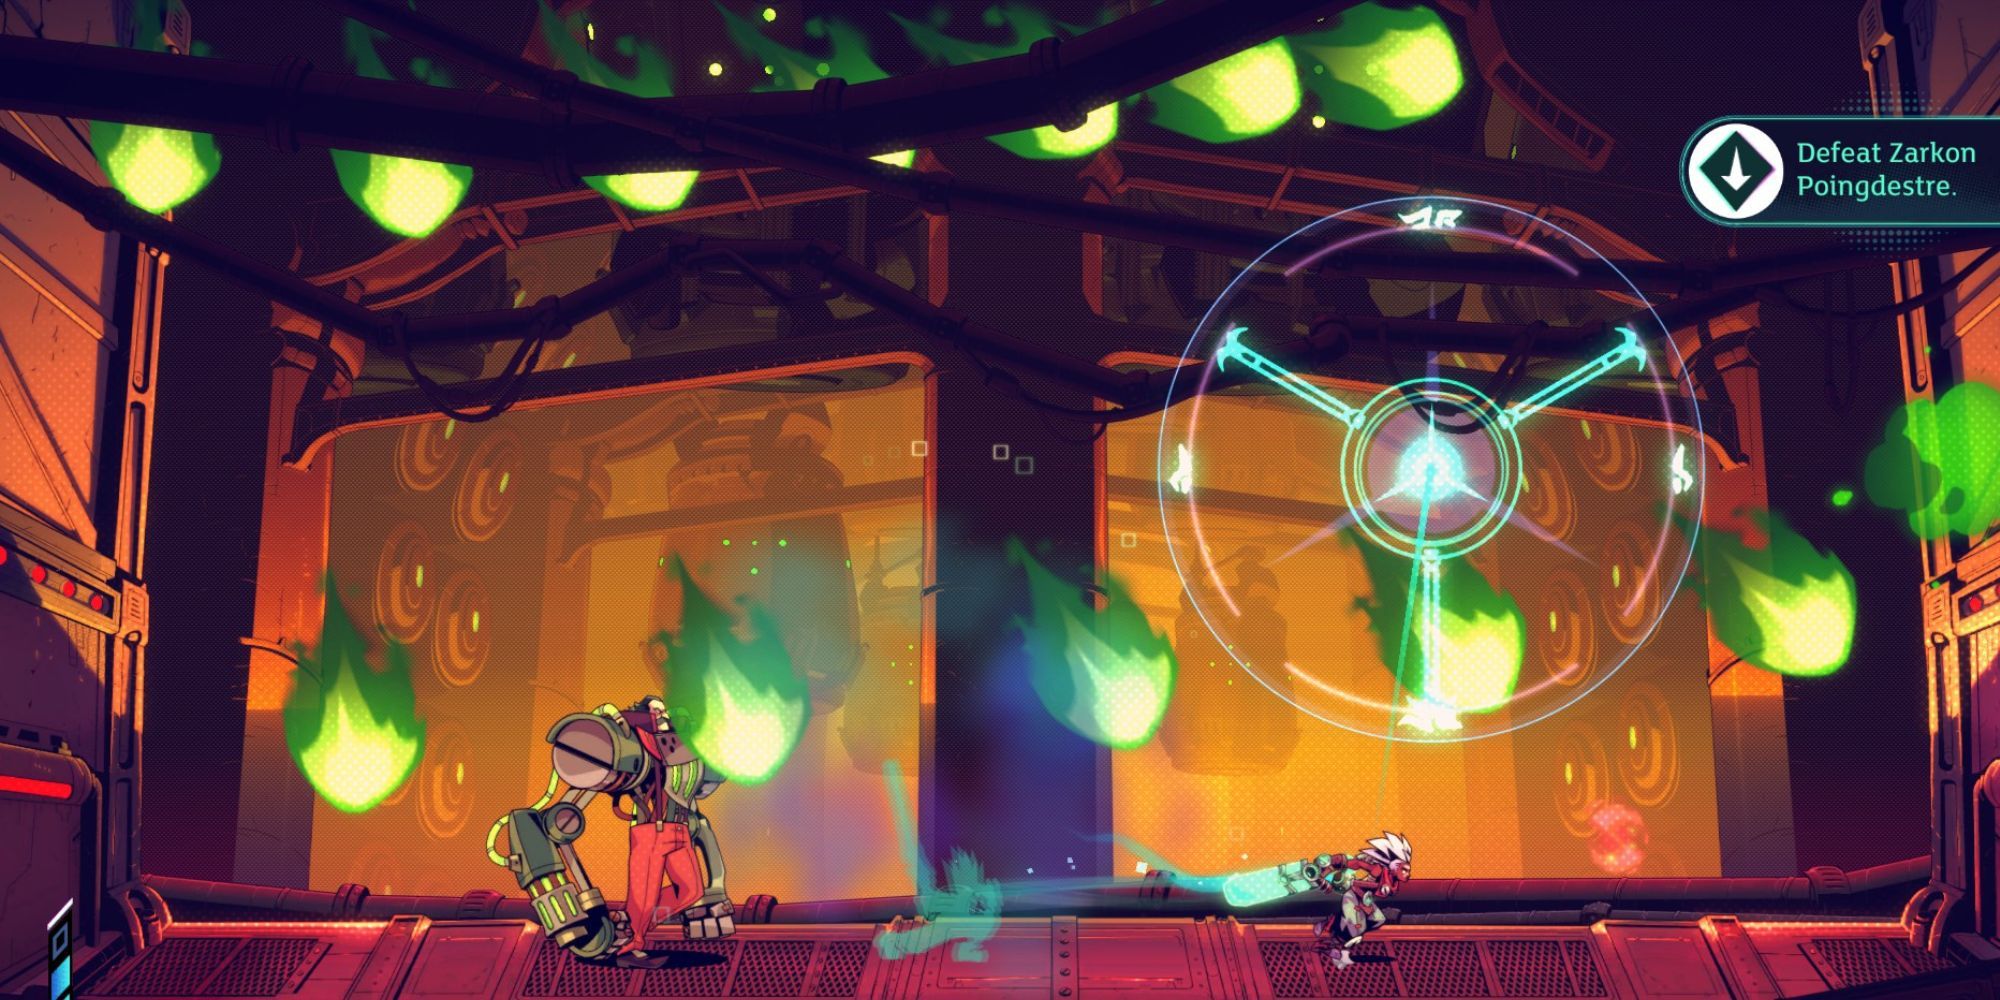 Convergence screenshot protagonist dodging Zarkon Poingdestre's projectiles